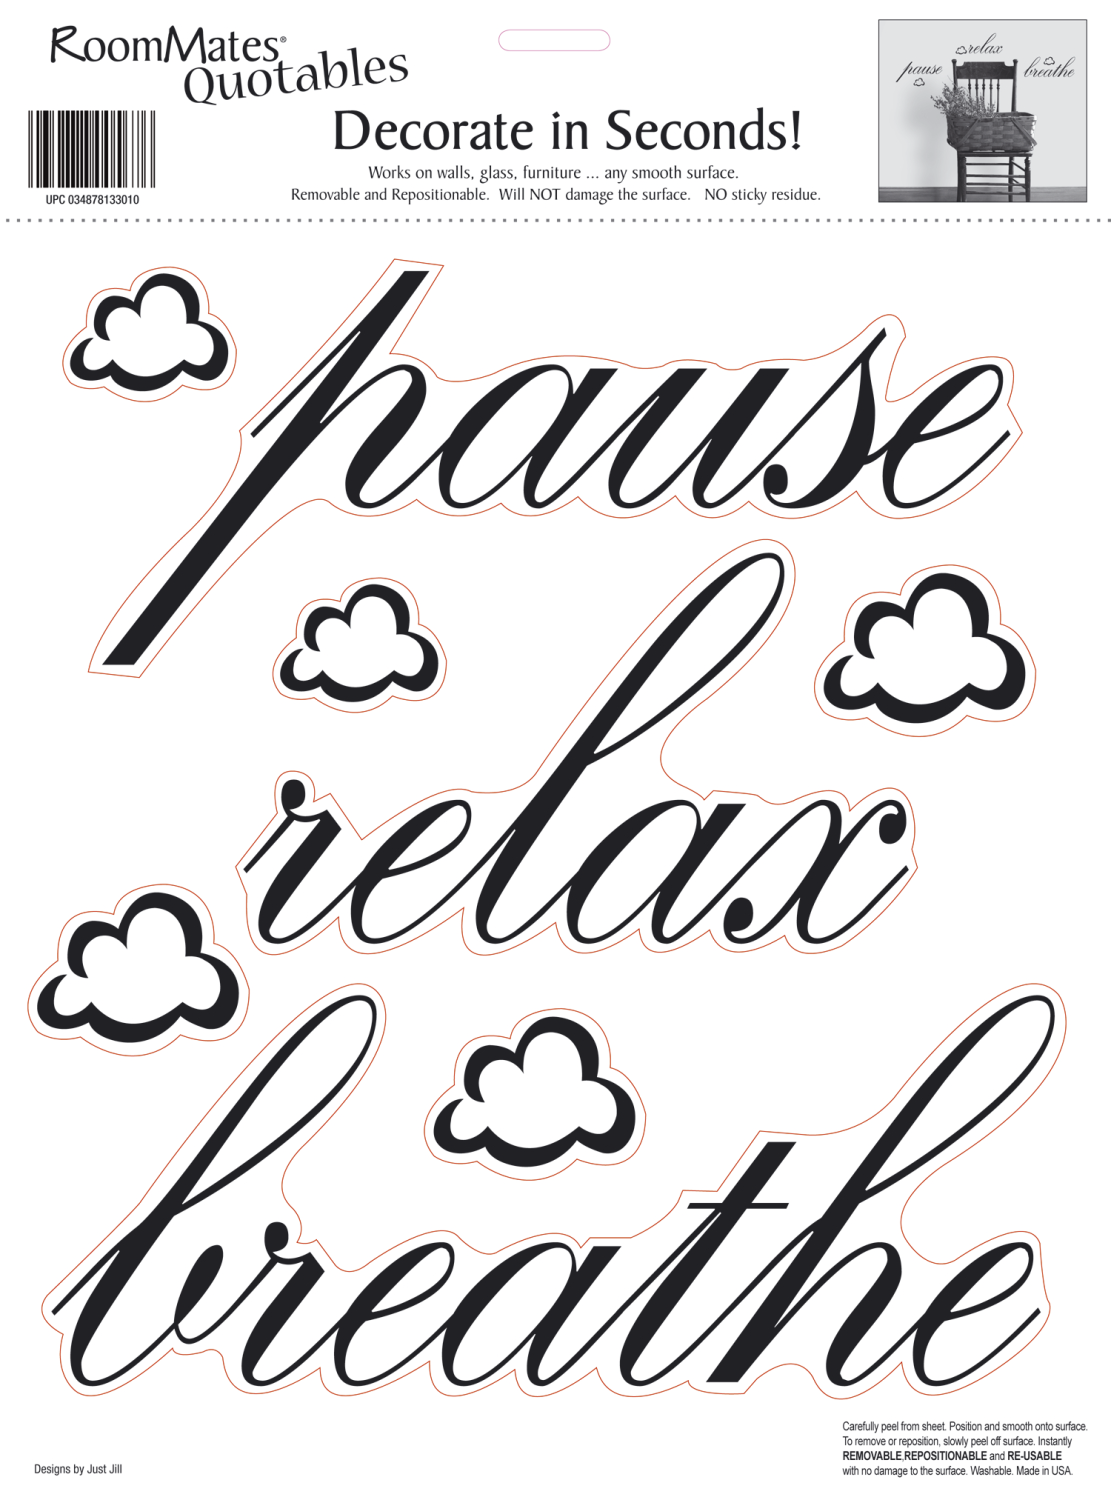 Stickere citate PAUSE, RELAX , BREATHE | 1 colita de 25,4 cm x 33 cm ka-international.ro